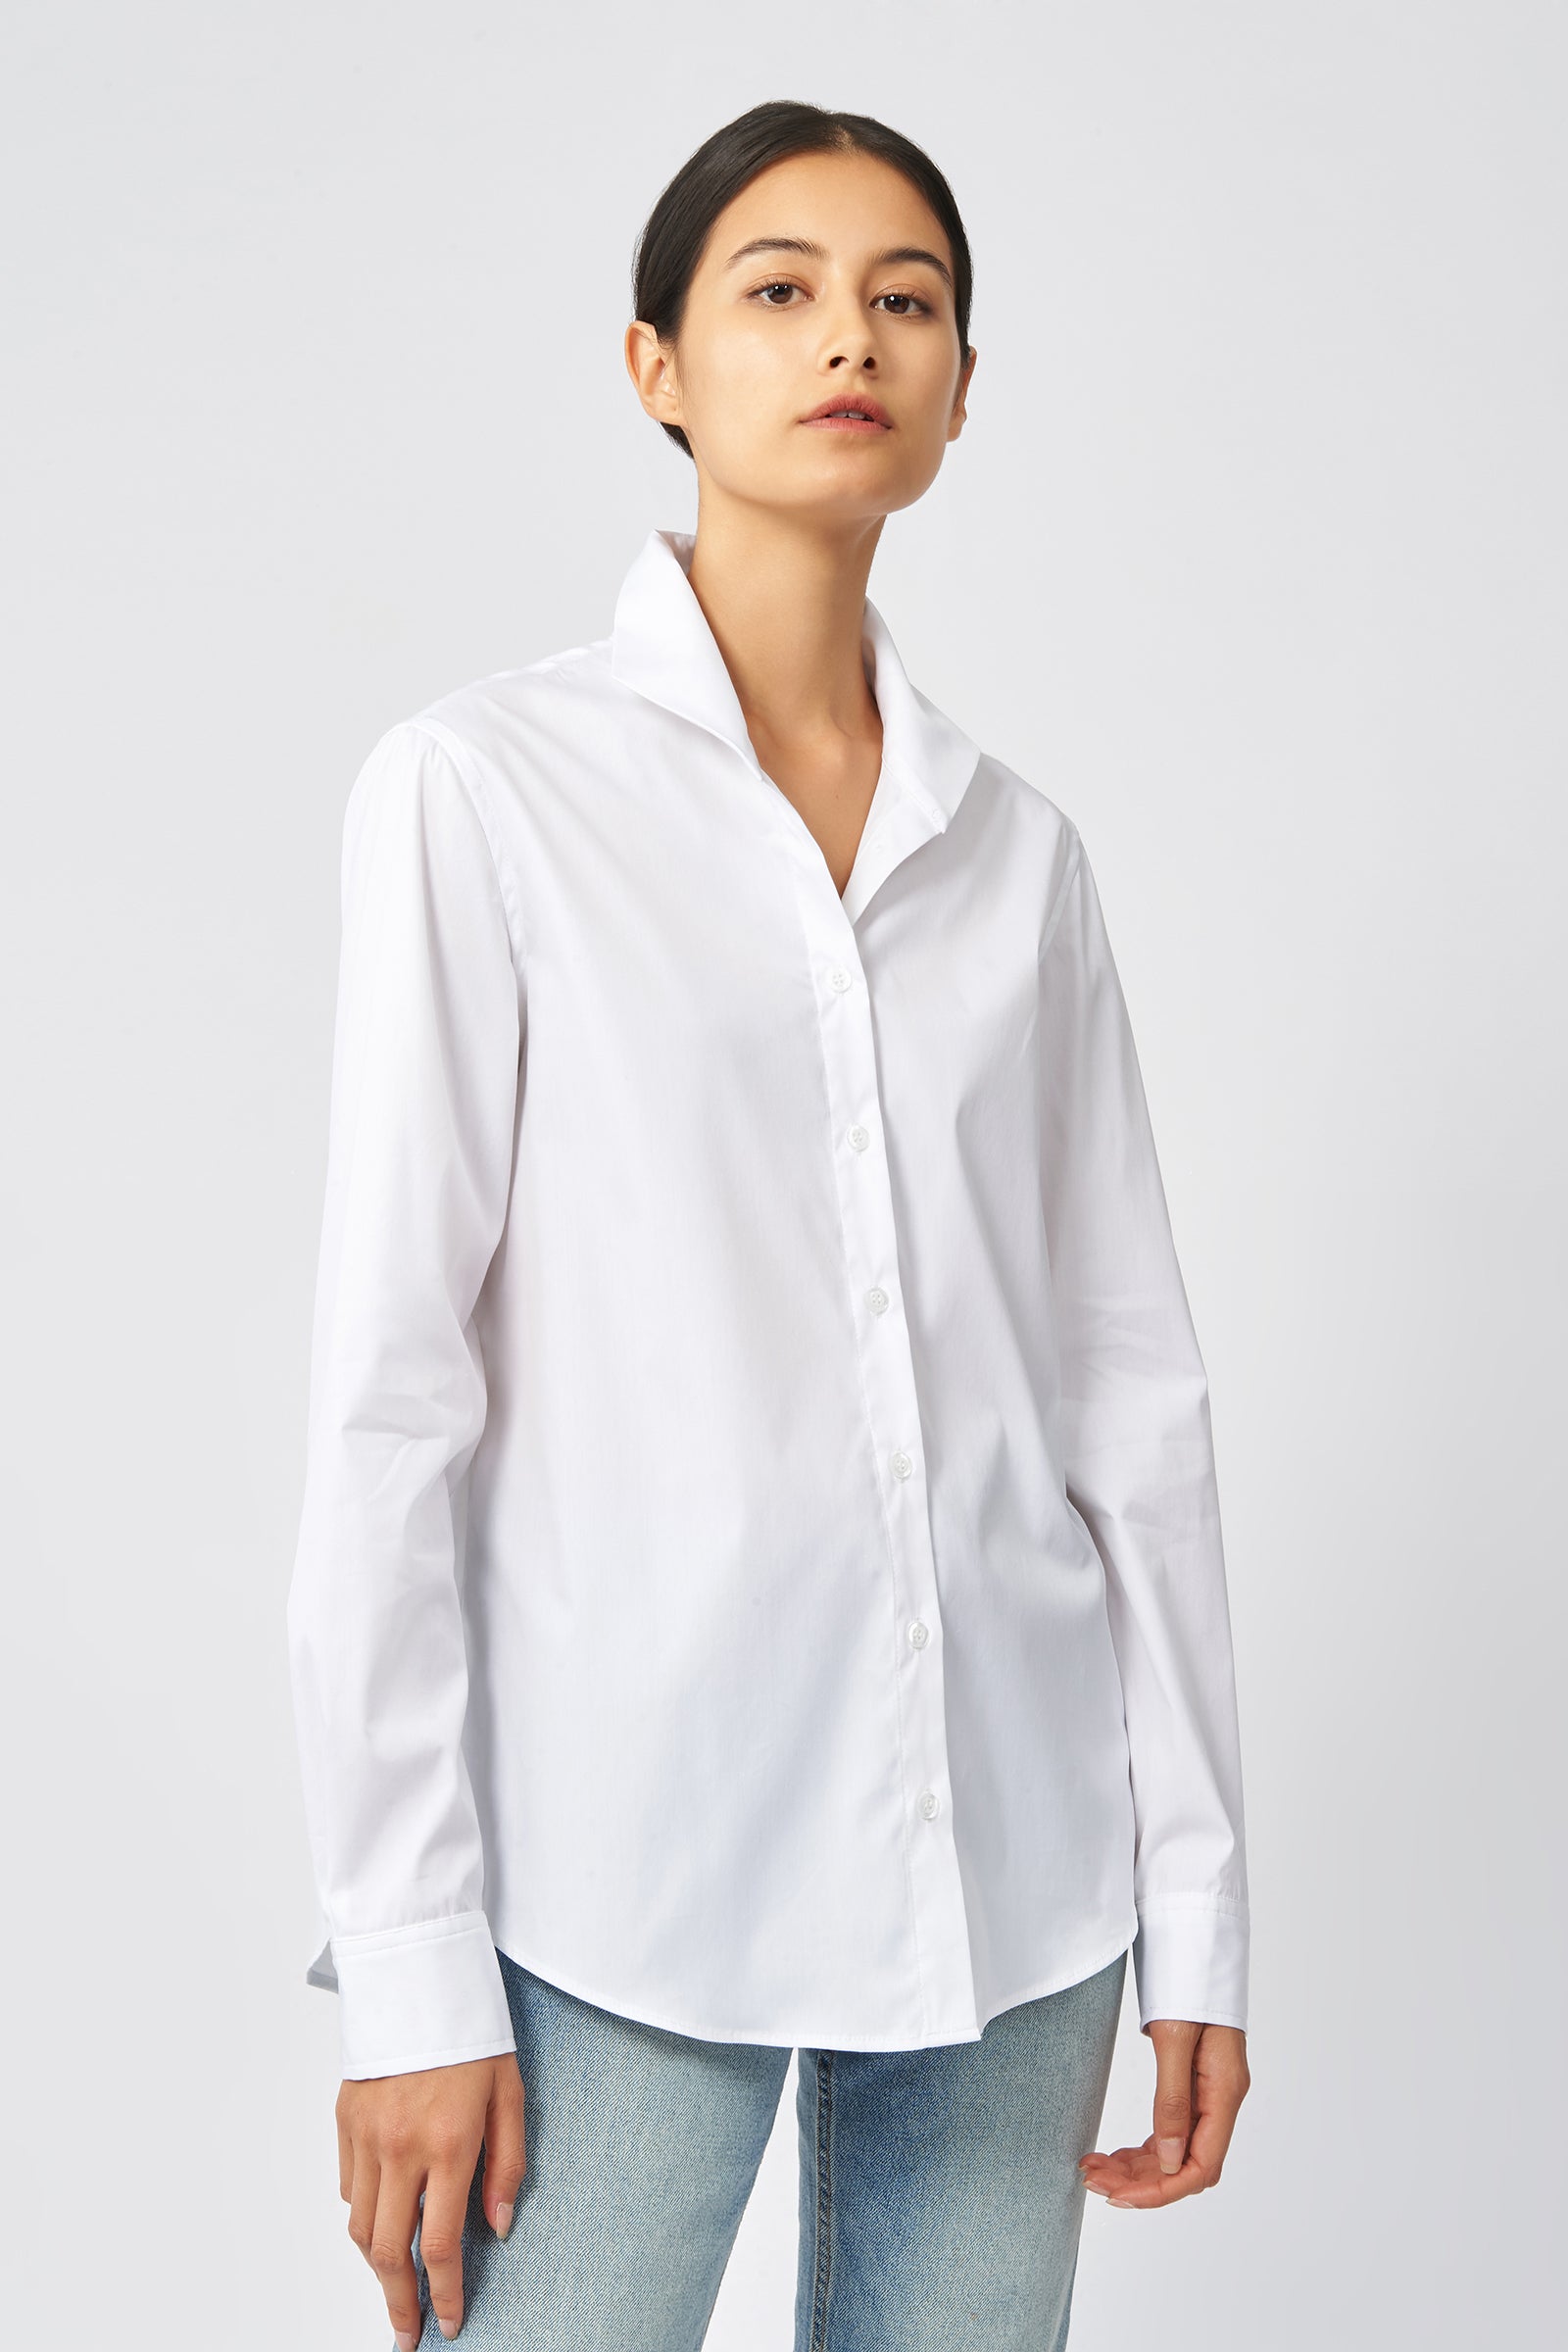 Kal Rieman Ginna Box Pleat Shirt in White Ottoman on Model Front View